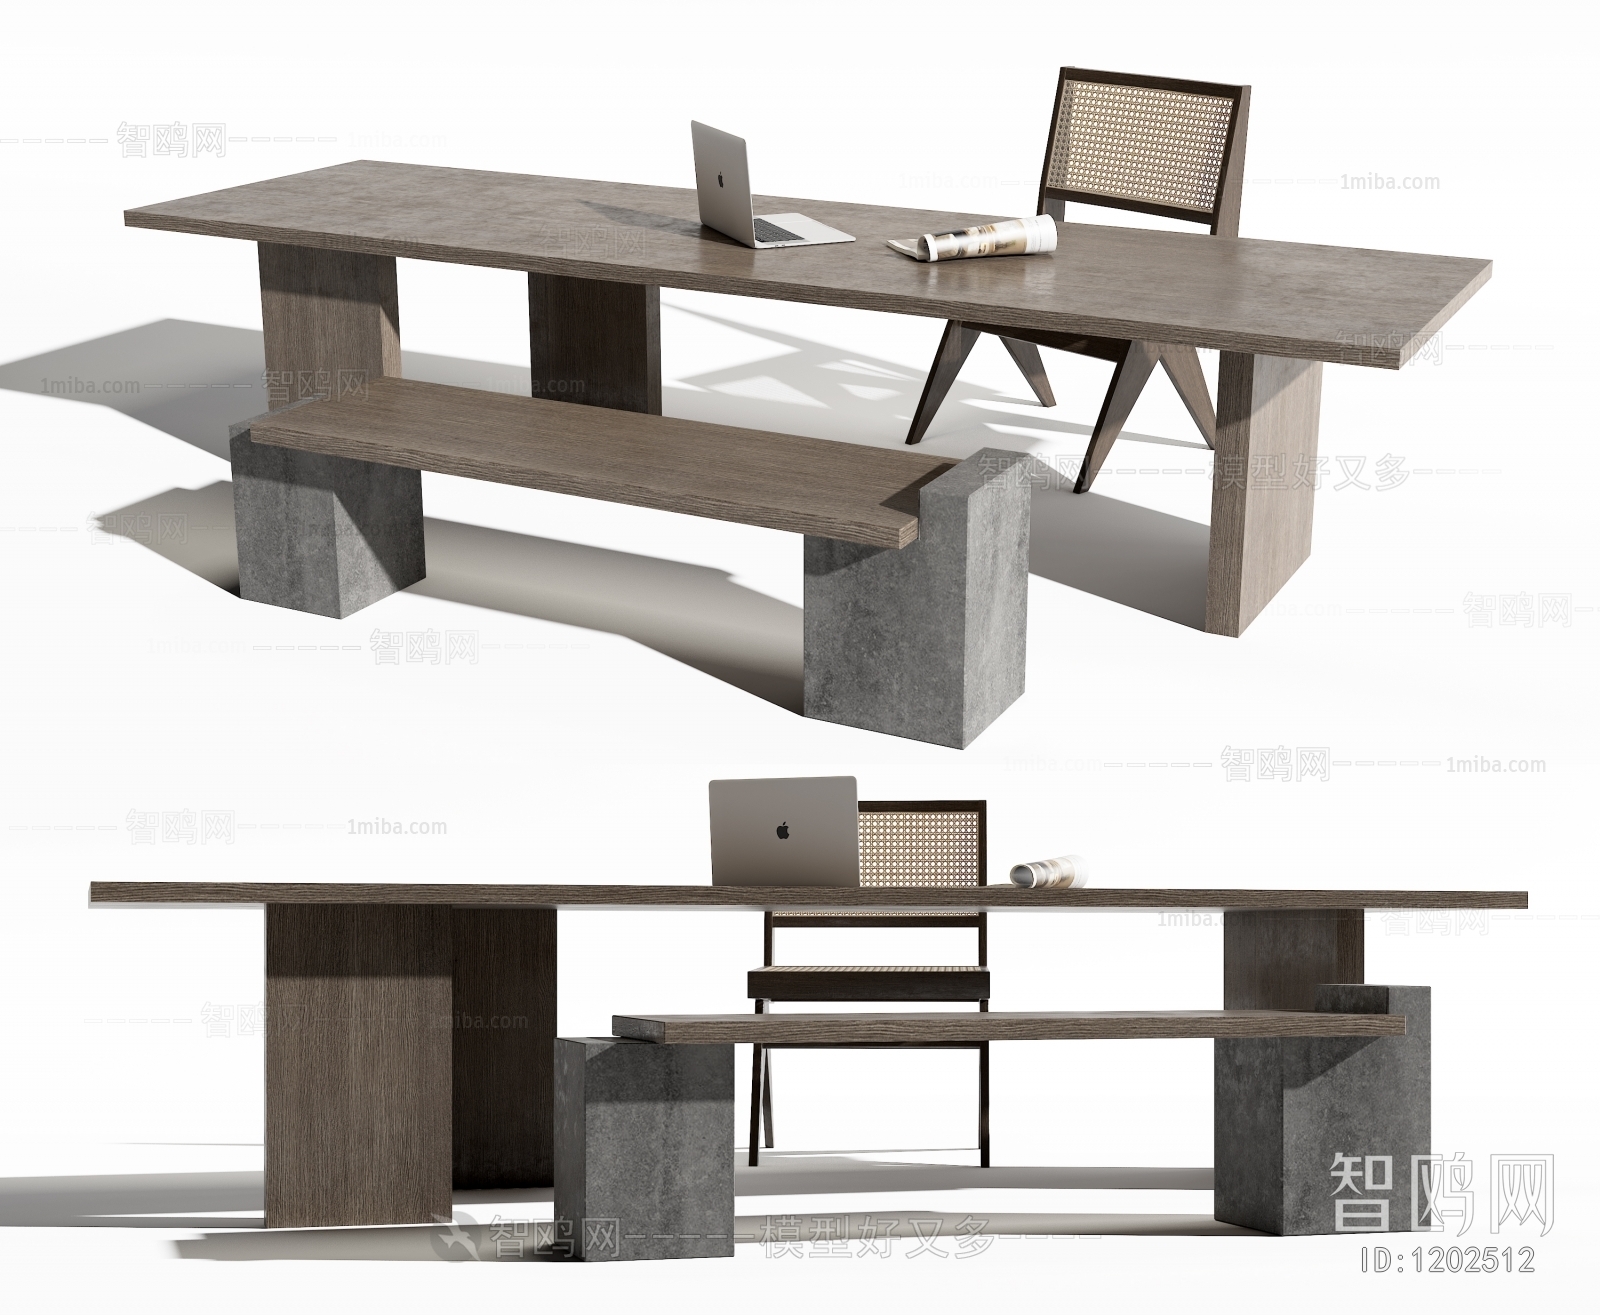 Wabi-sabi Style Computer Desk And Chair